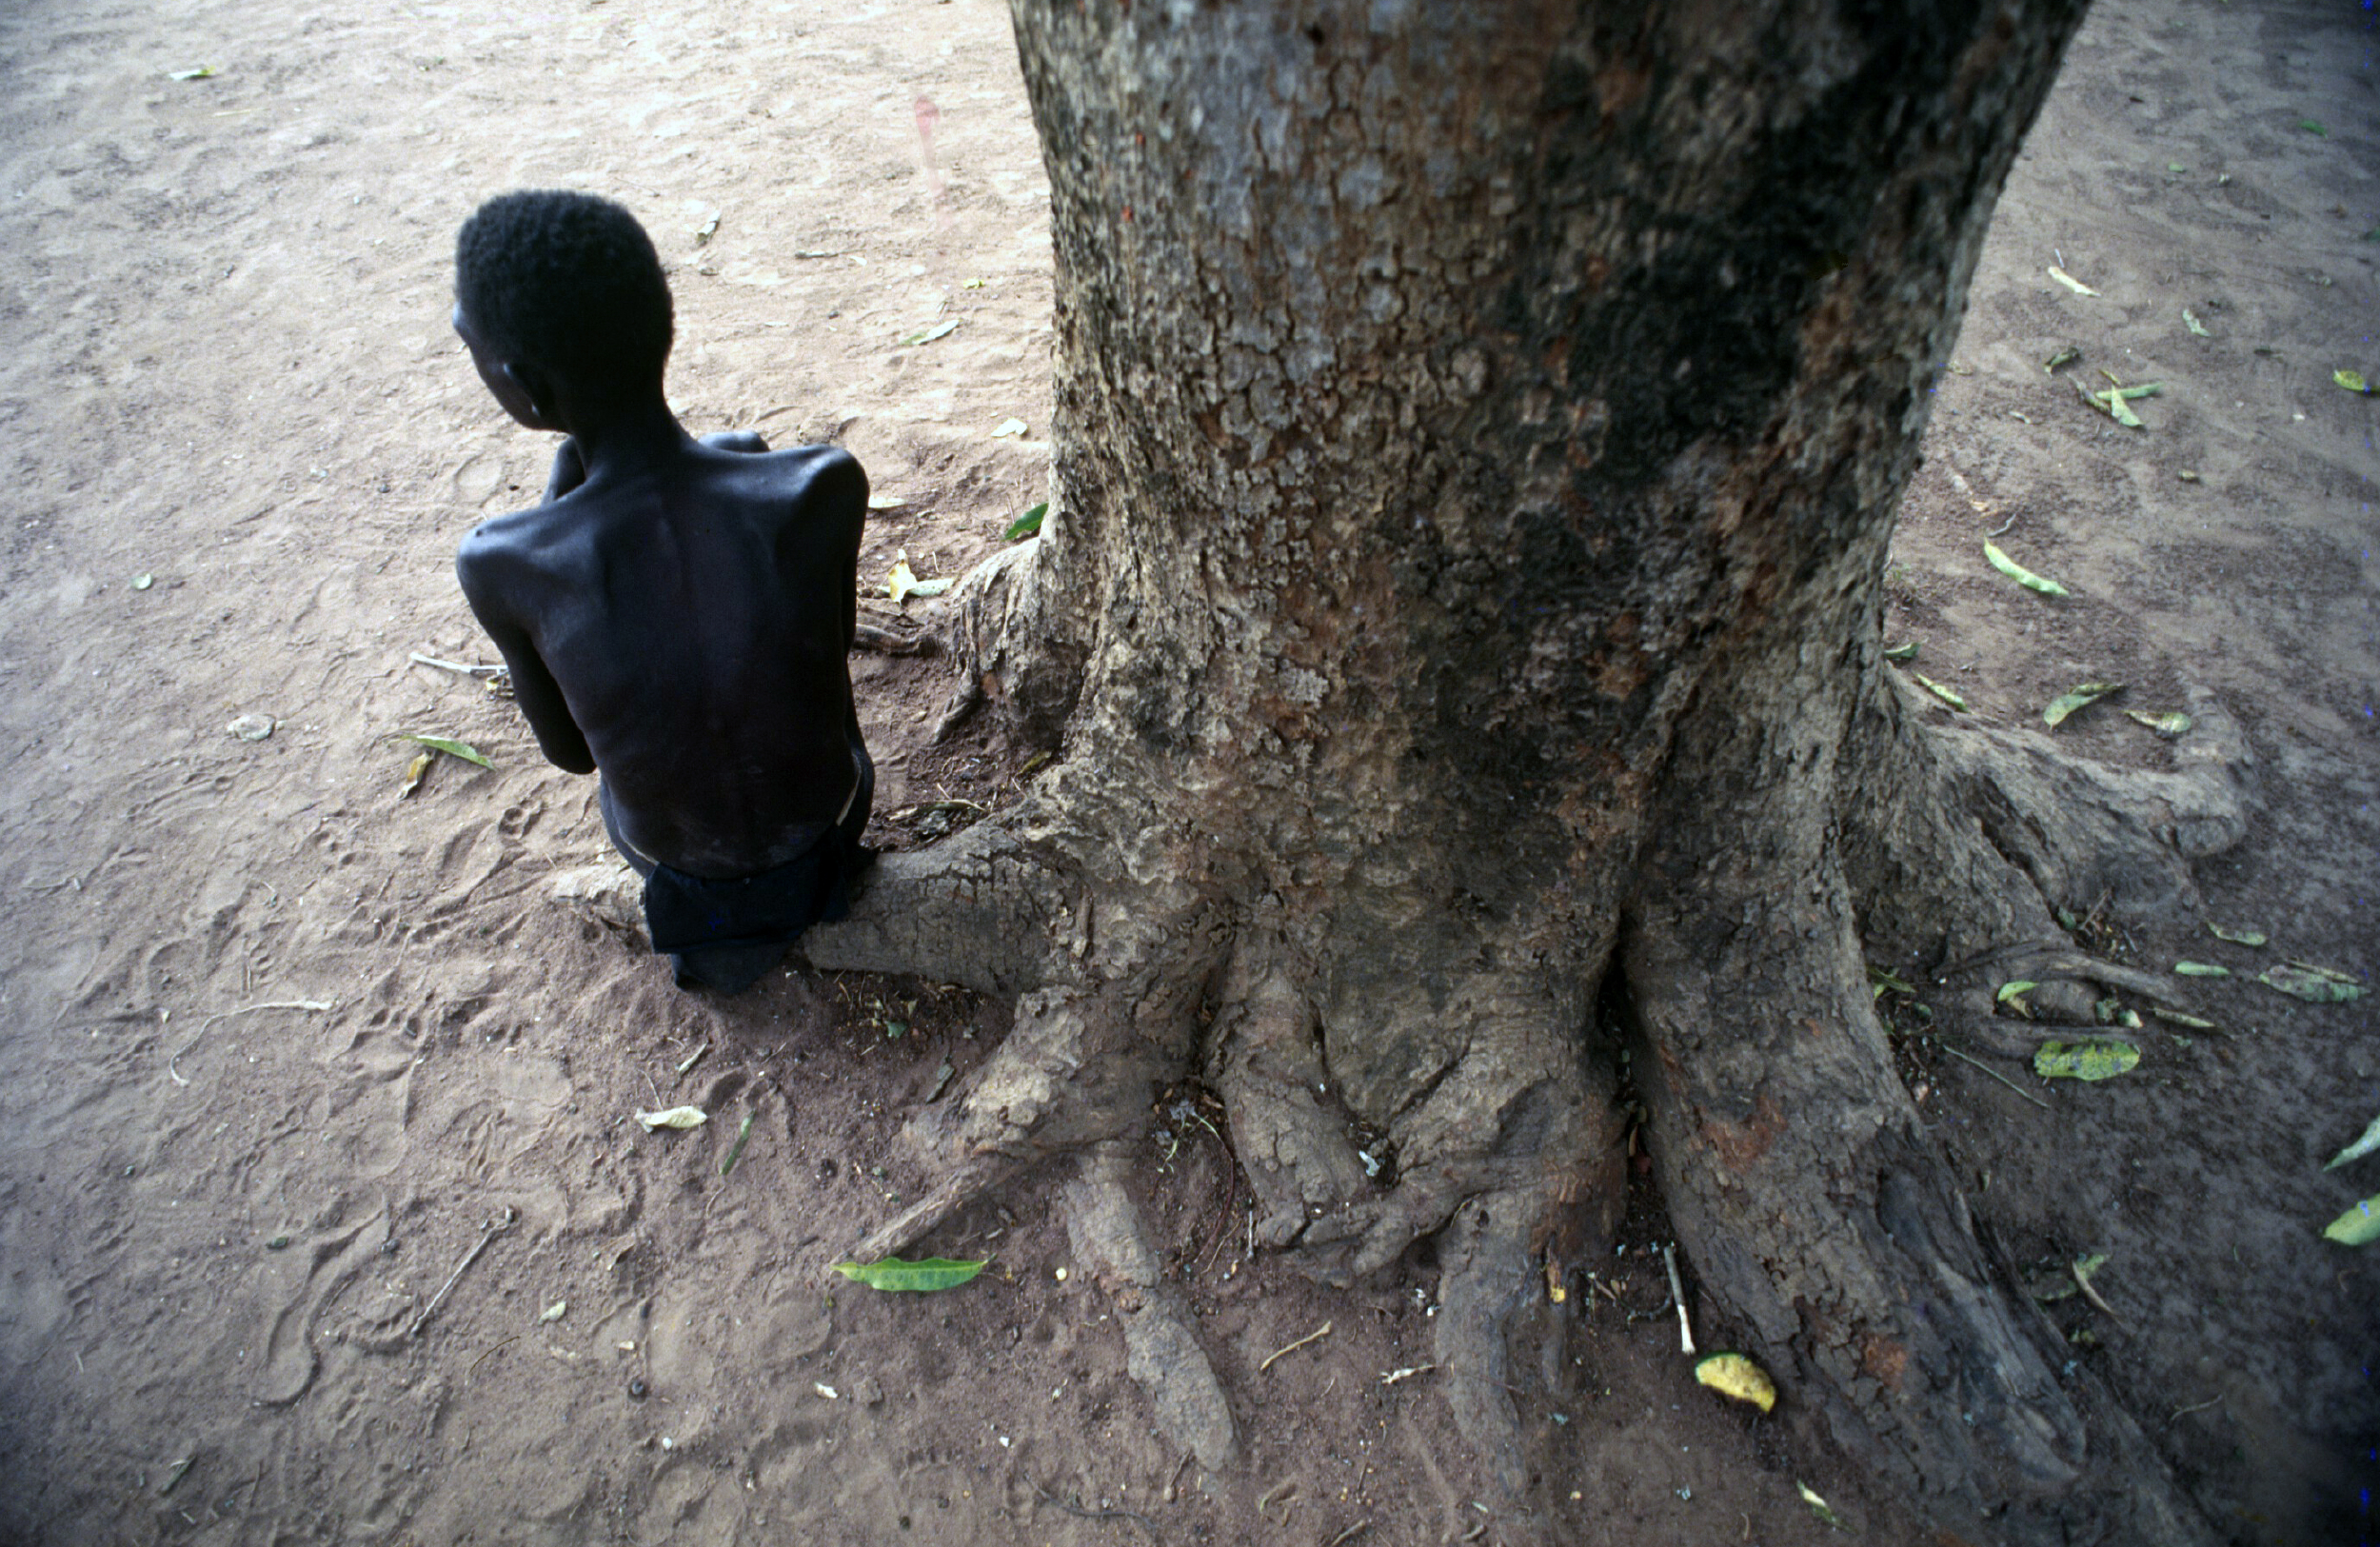  Stilled by starvation during Sudan's long-running civil war. 1993 